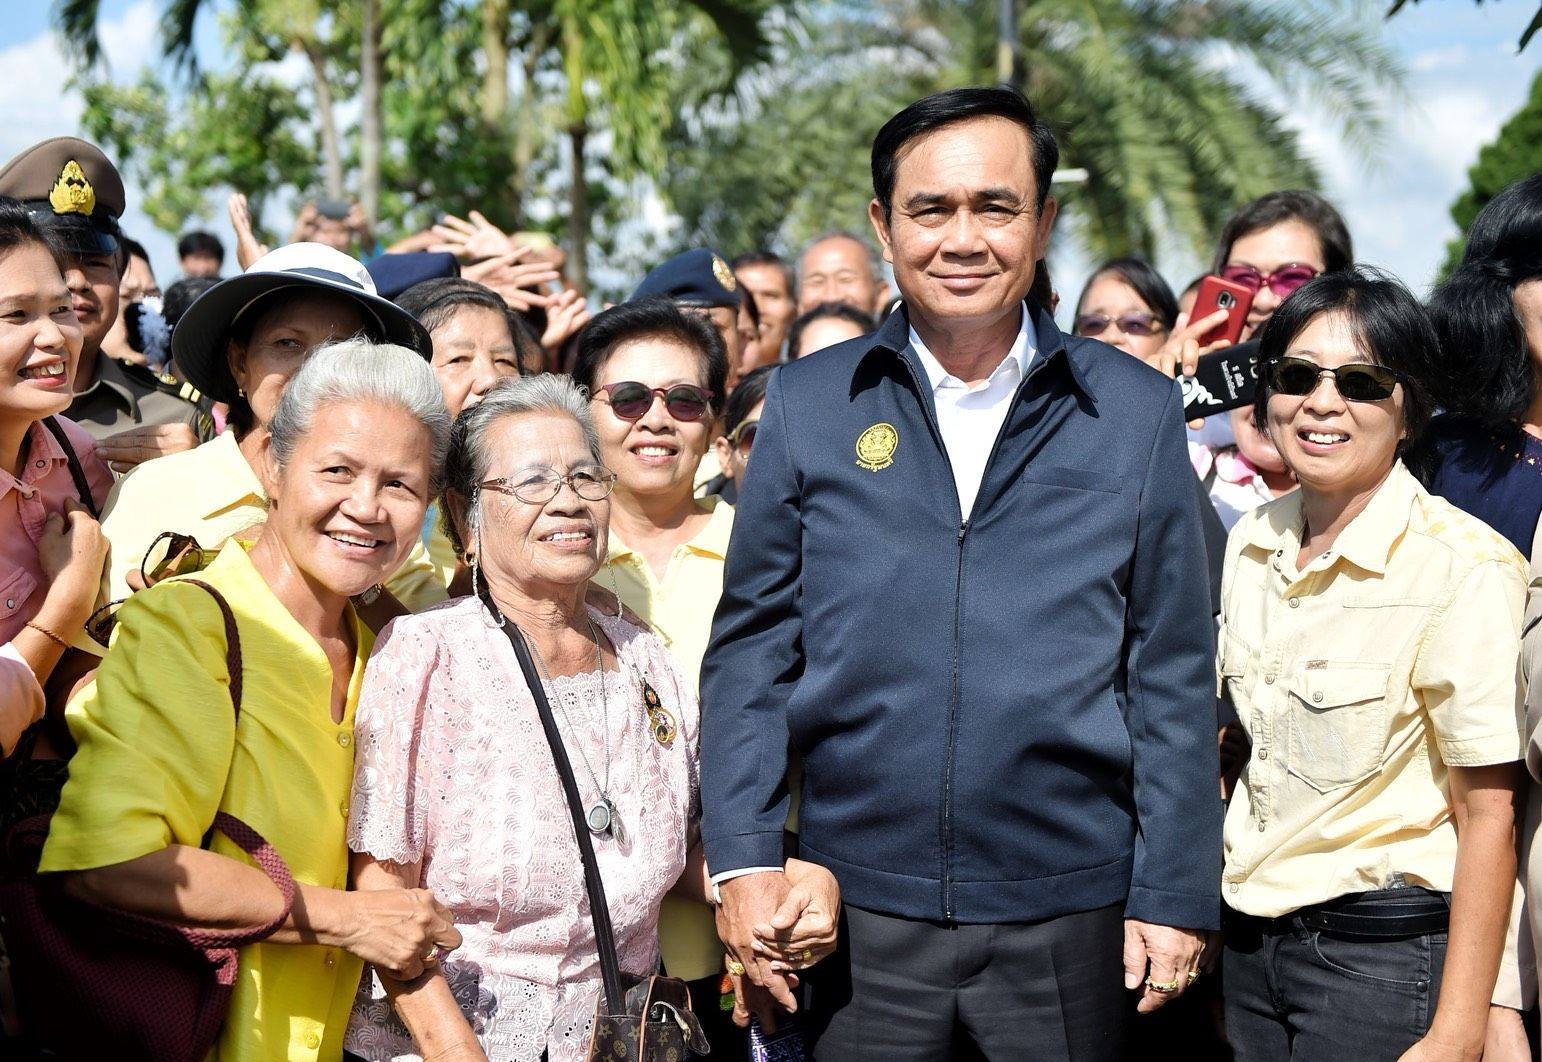 Prime Minister of Thailand Prayut Chan-ocha during a visit